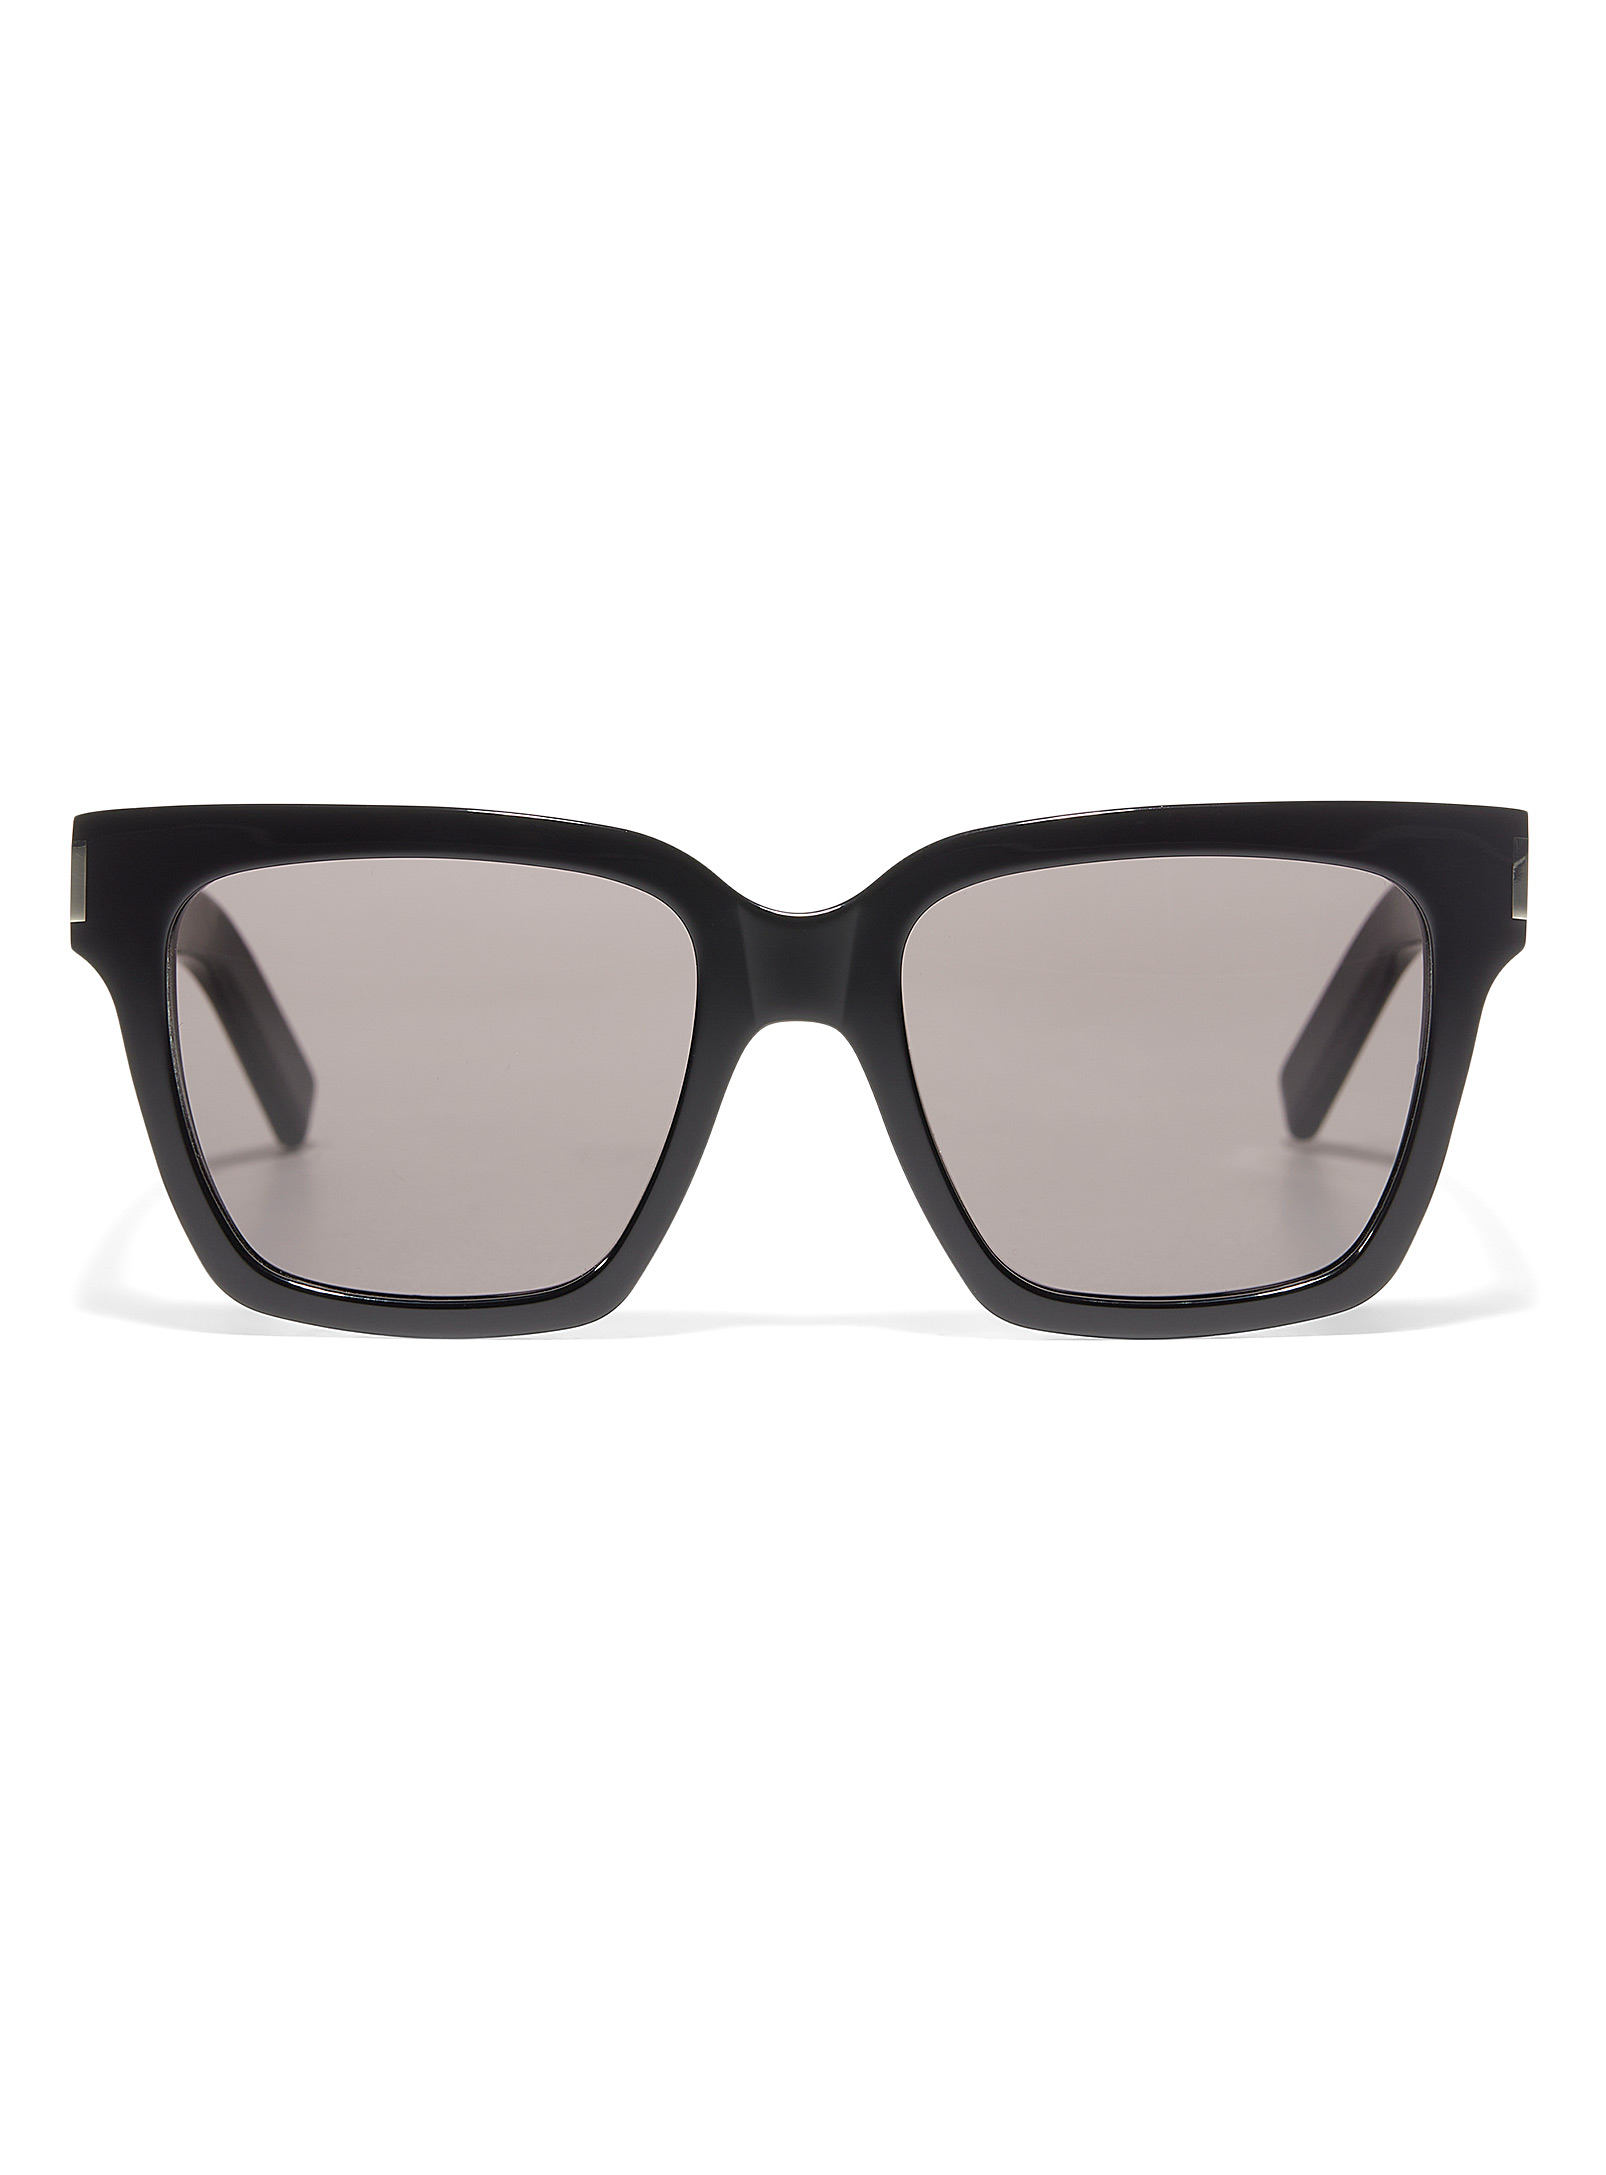 Saint Laurent Glossy Black Square Sunglasses